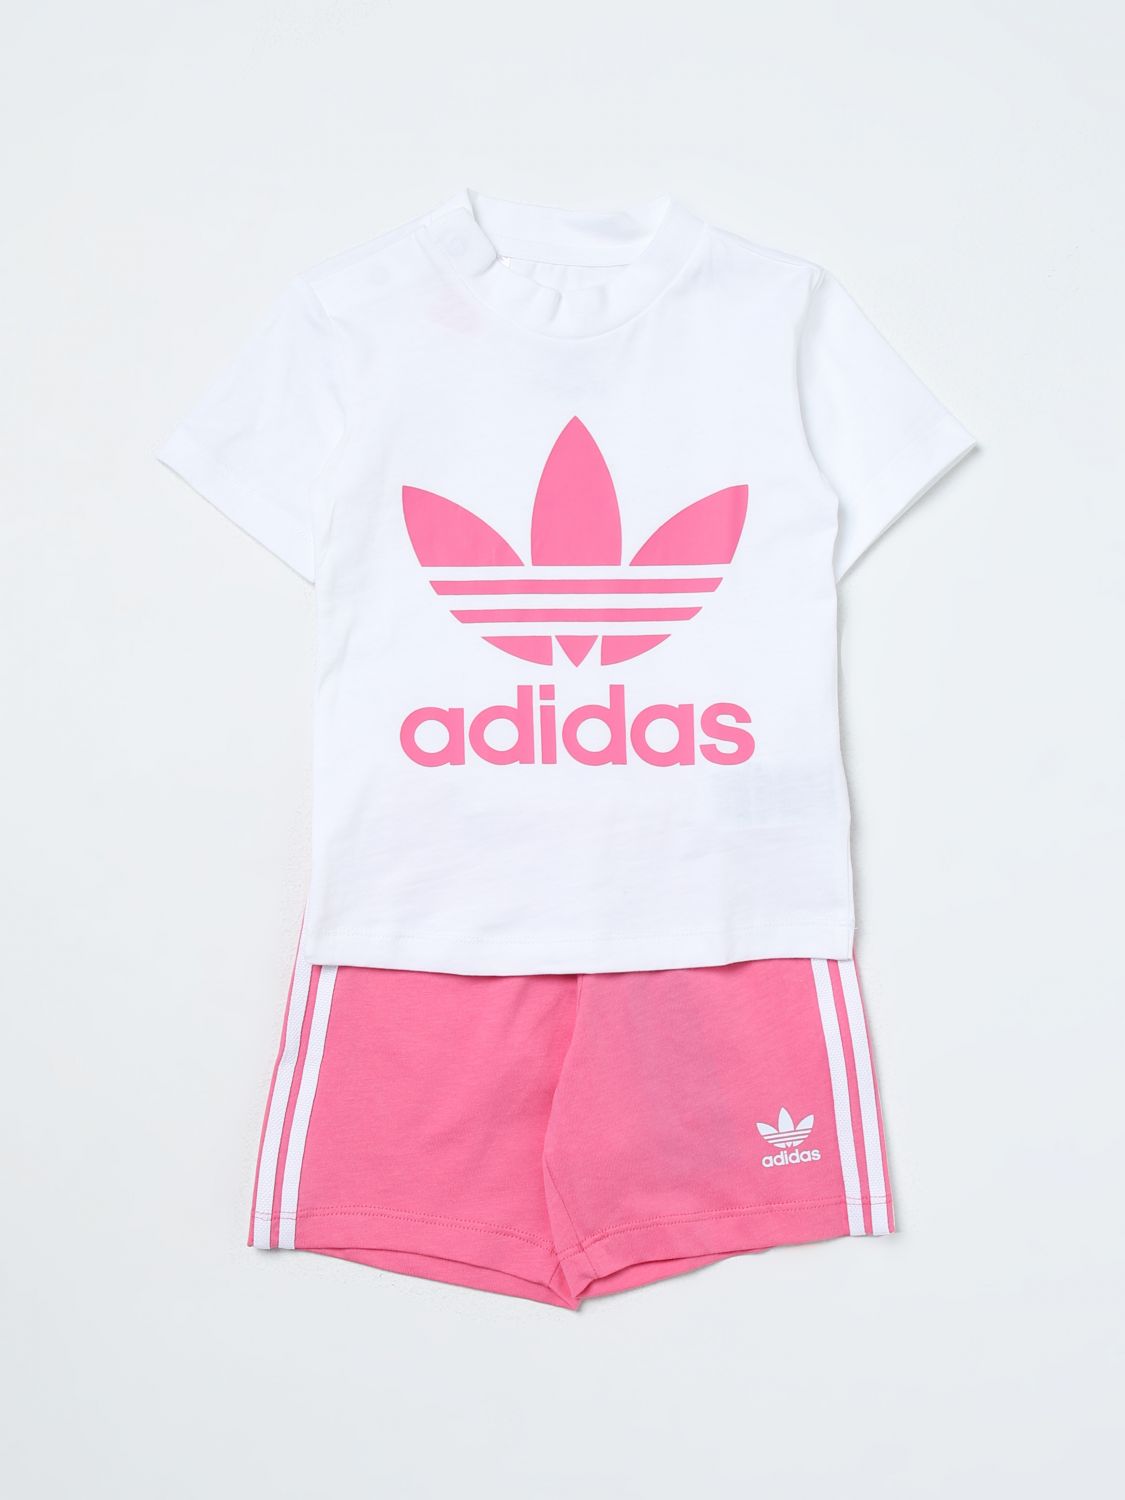 Adidas Originals Babies' Romper  Kids Color Pink In Multi